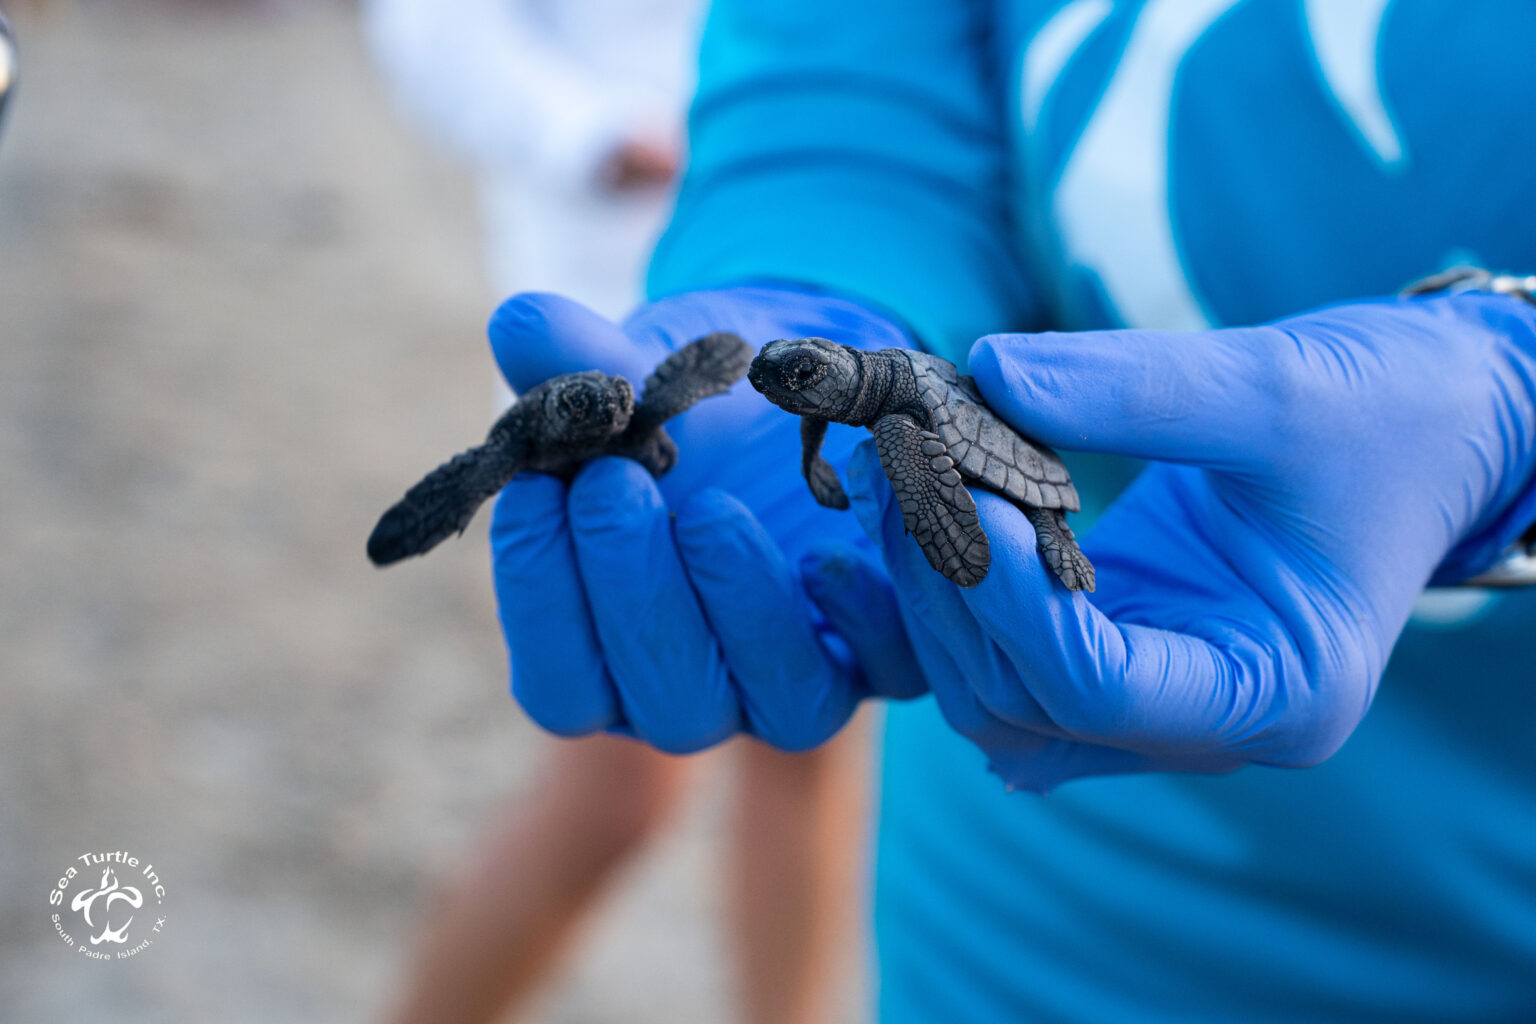 Island sees sea turtle nesting season begin 